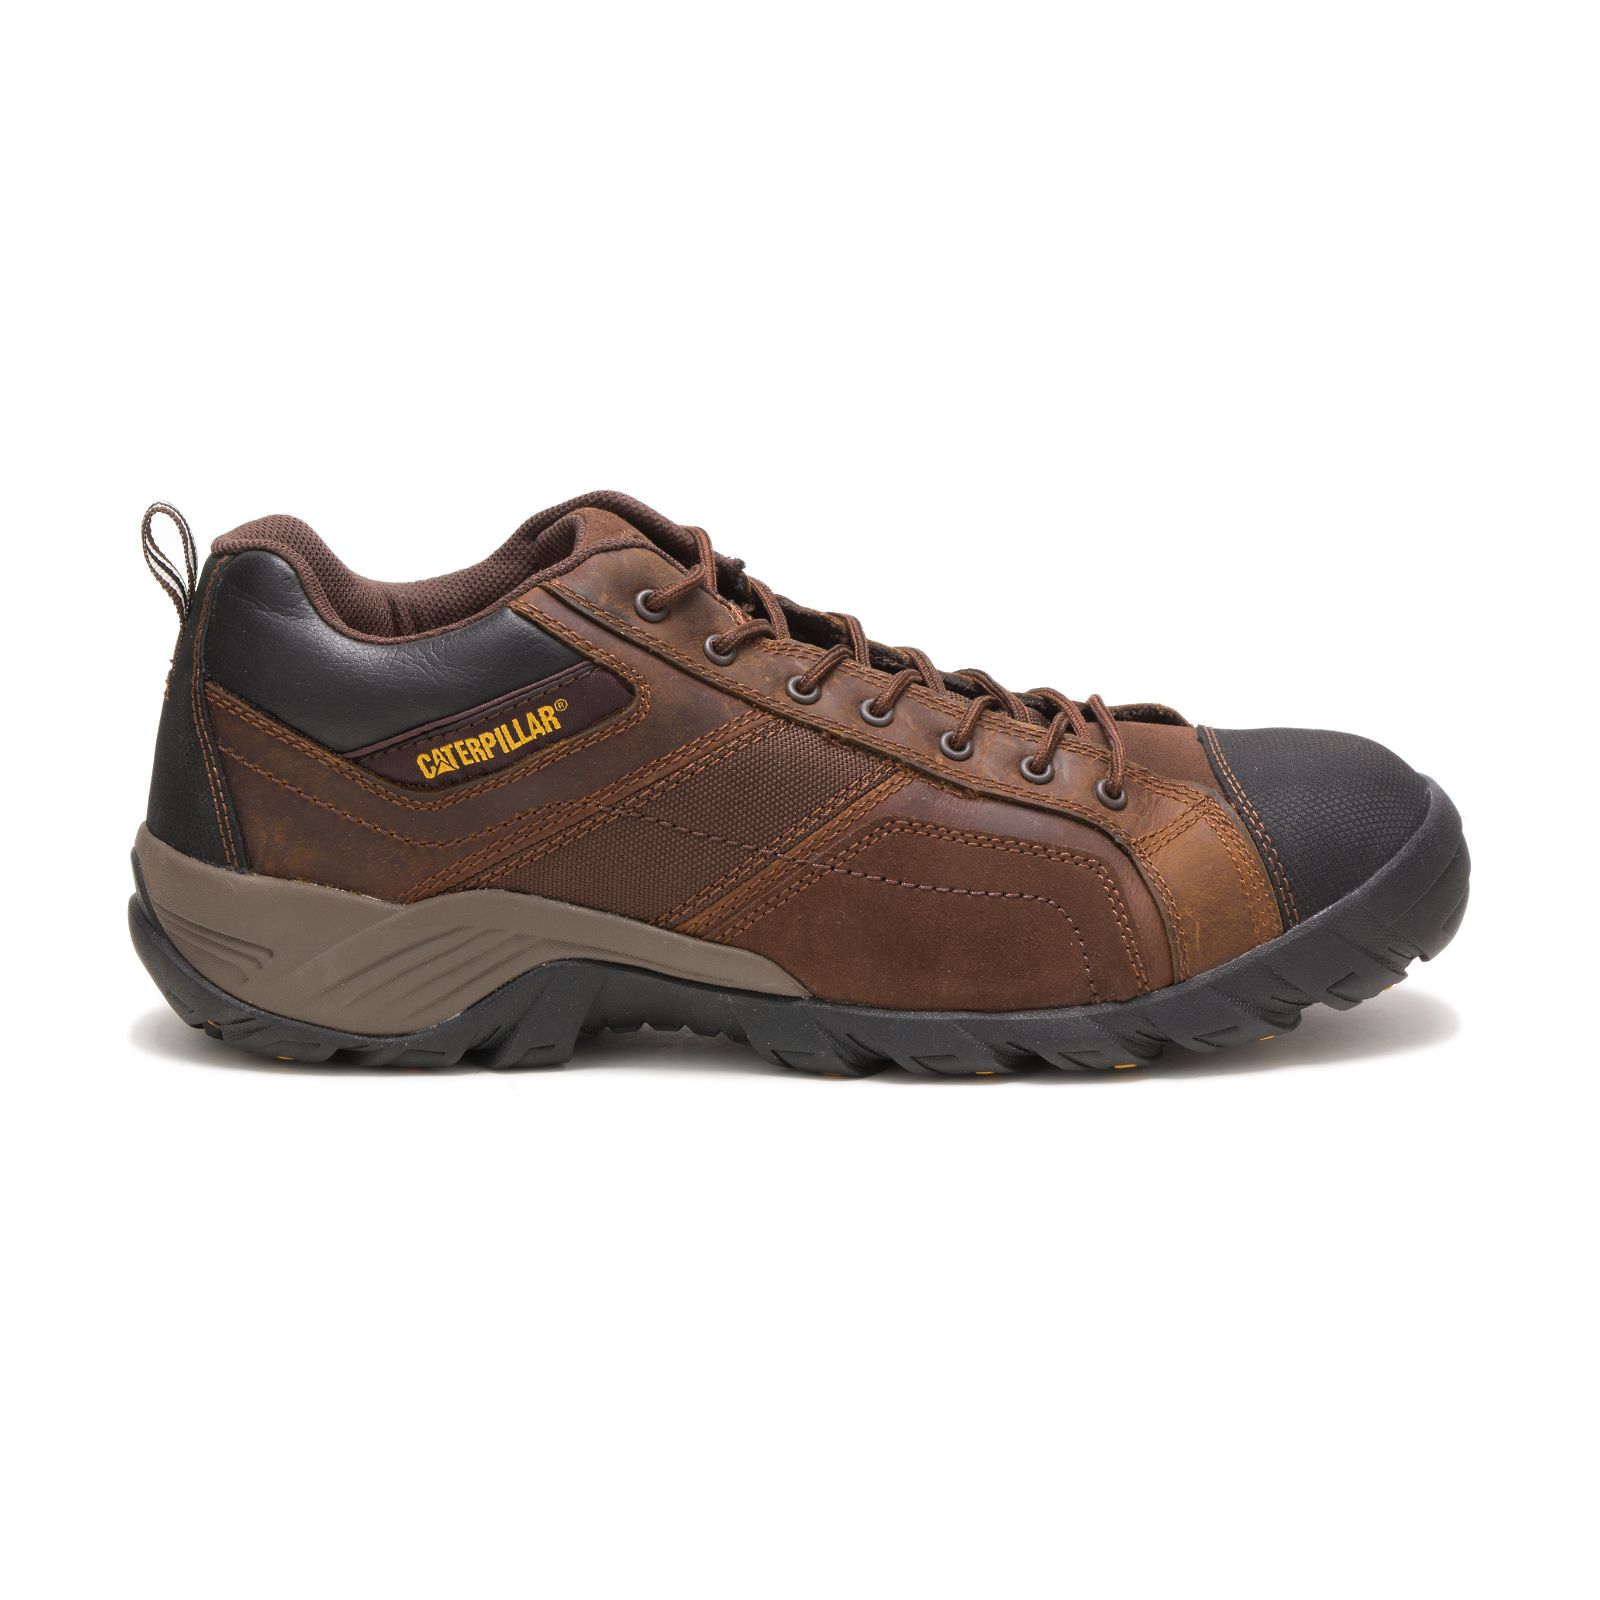 Caterpillar Shoes Sale Pakistan - Caterpillar Argon Composite Toe Mens Sneakers Dark Brown (457812-QHR)